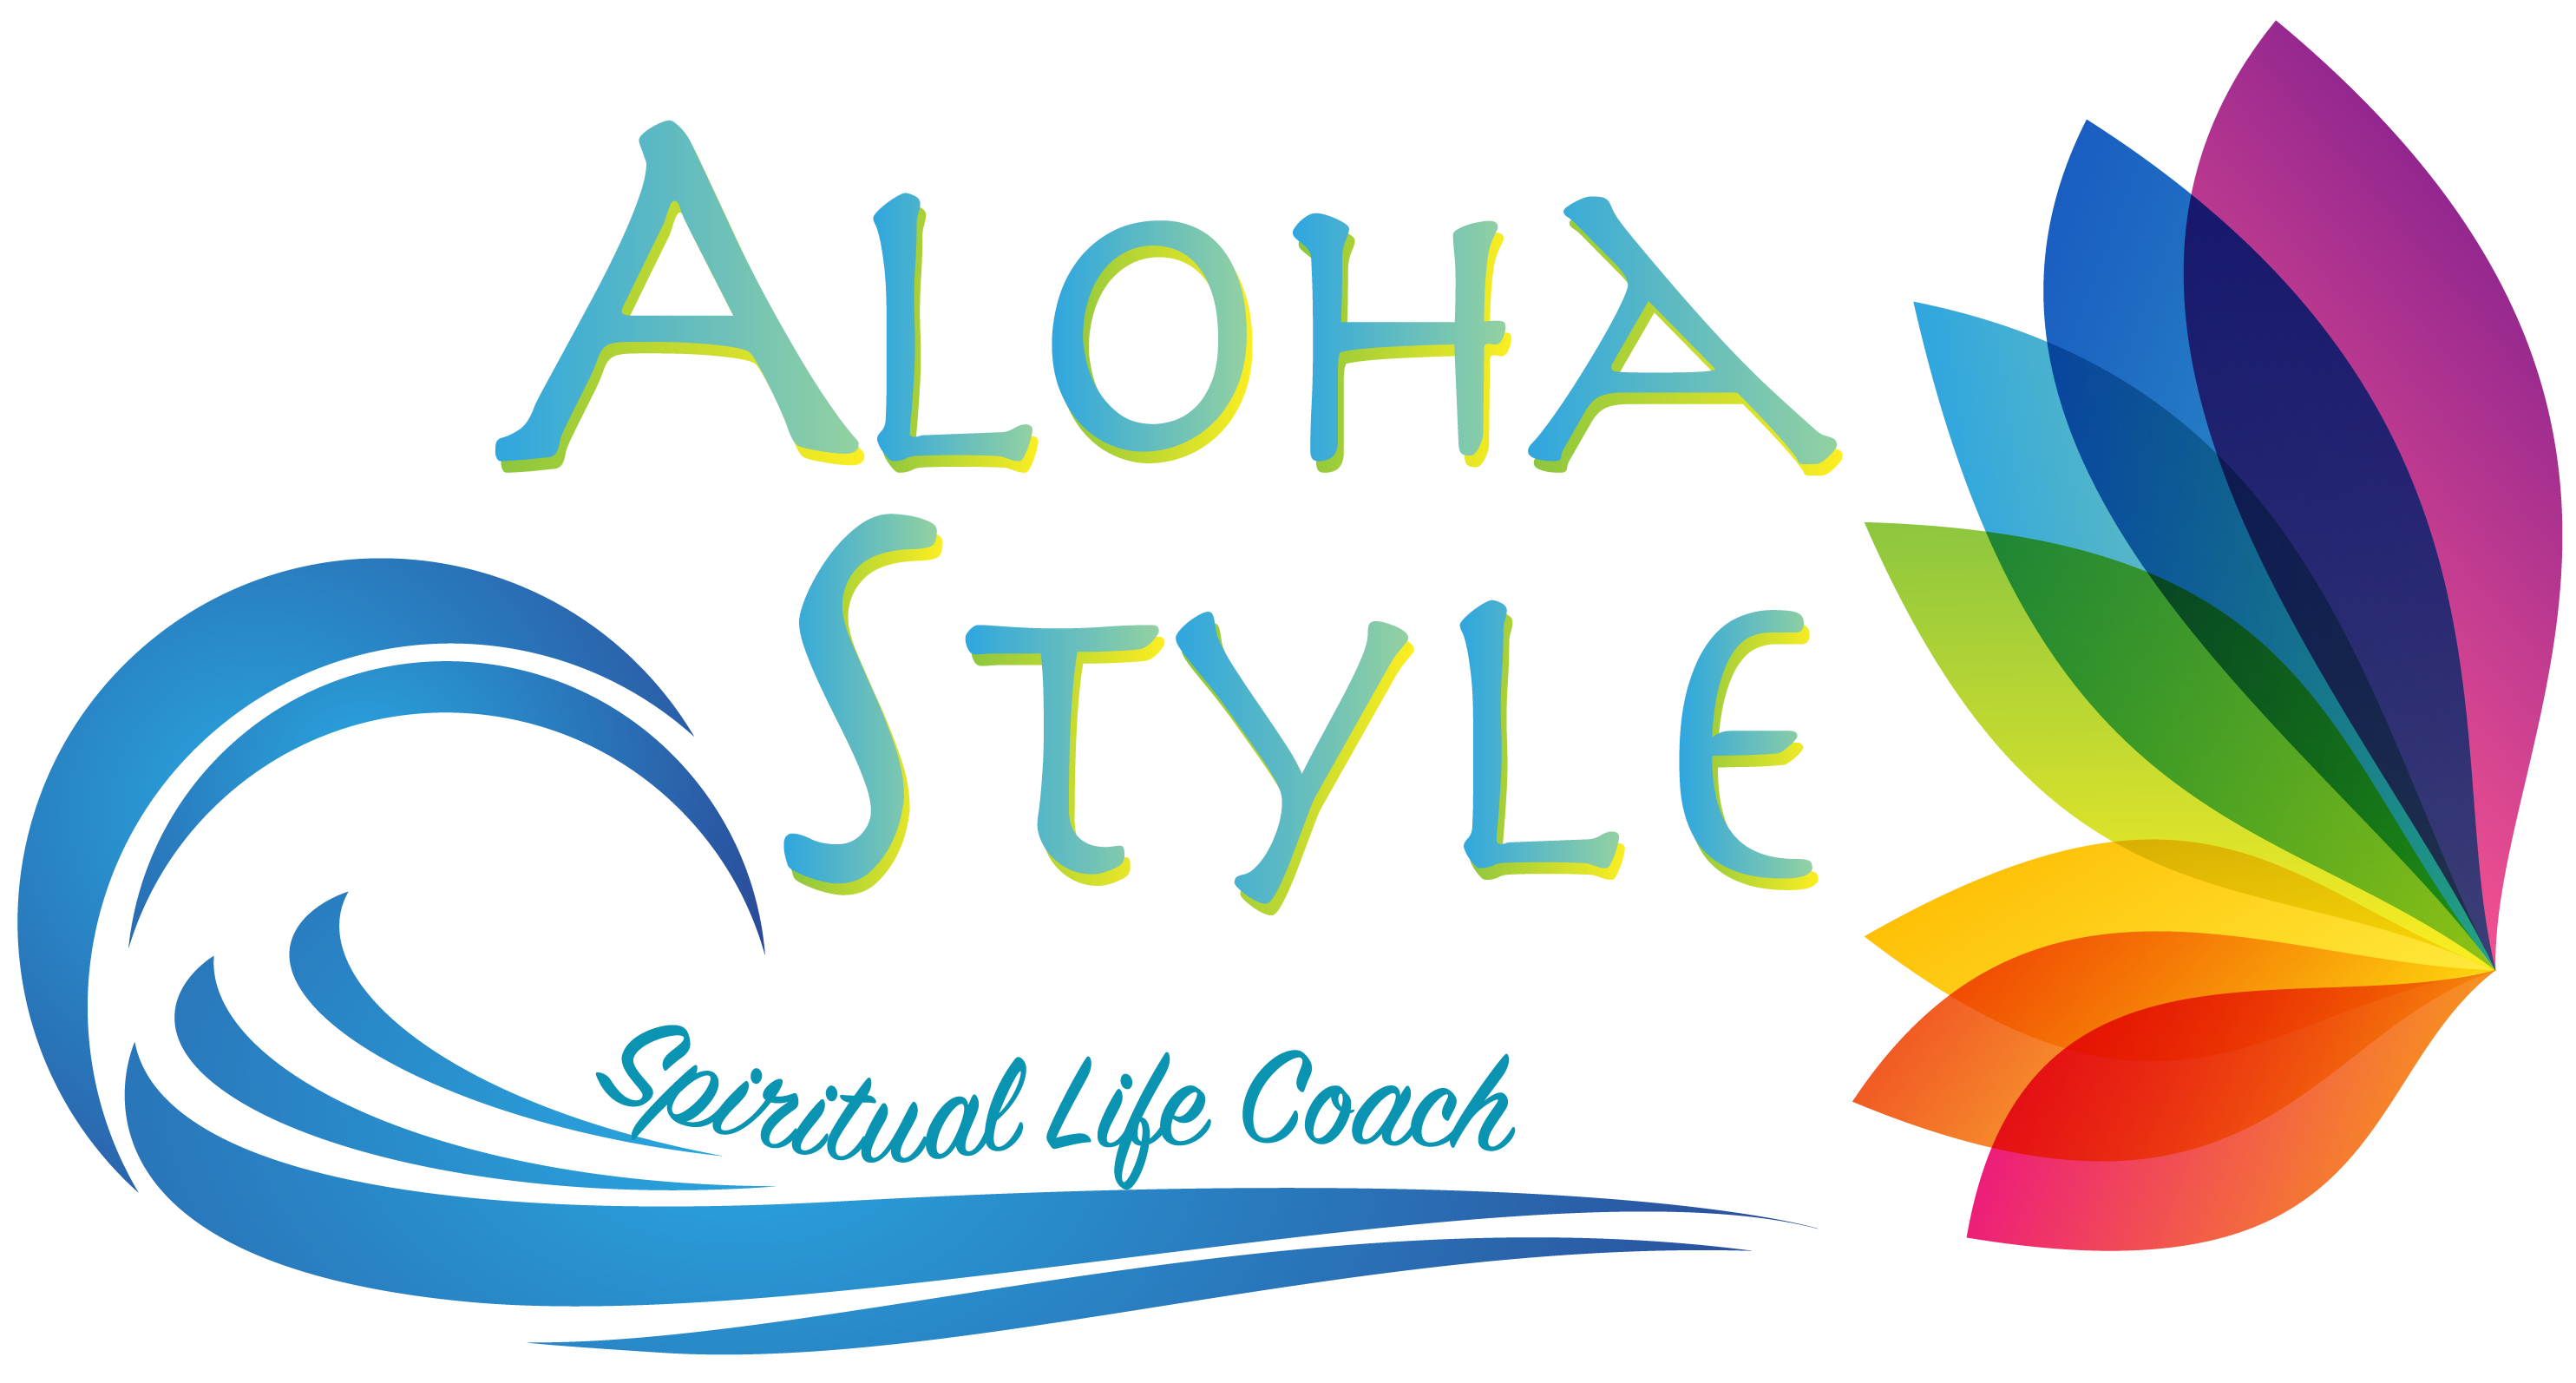 Aloha Style logo